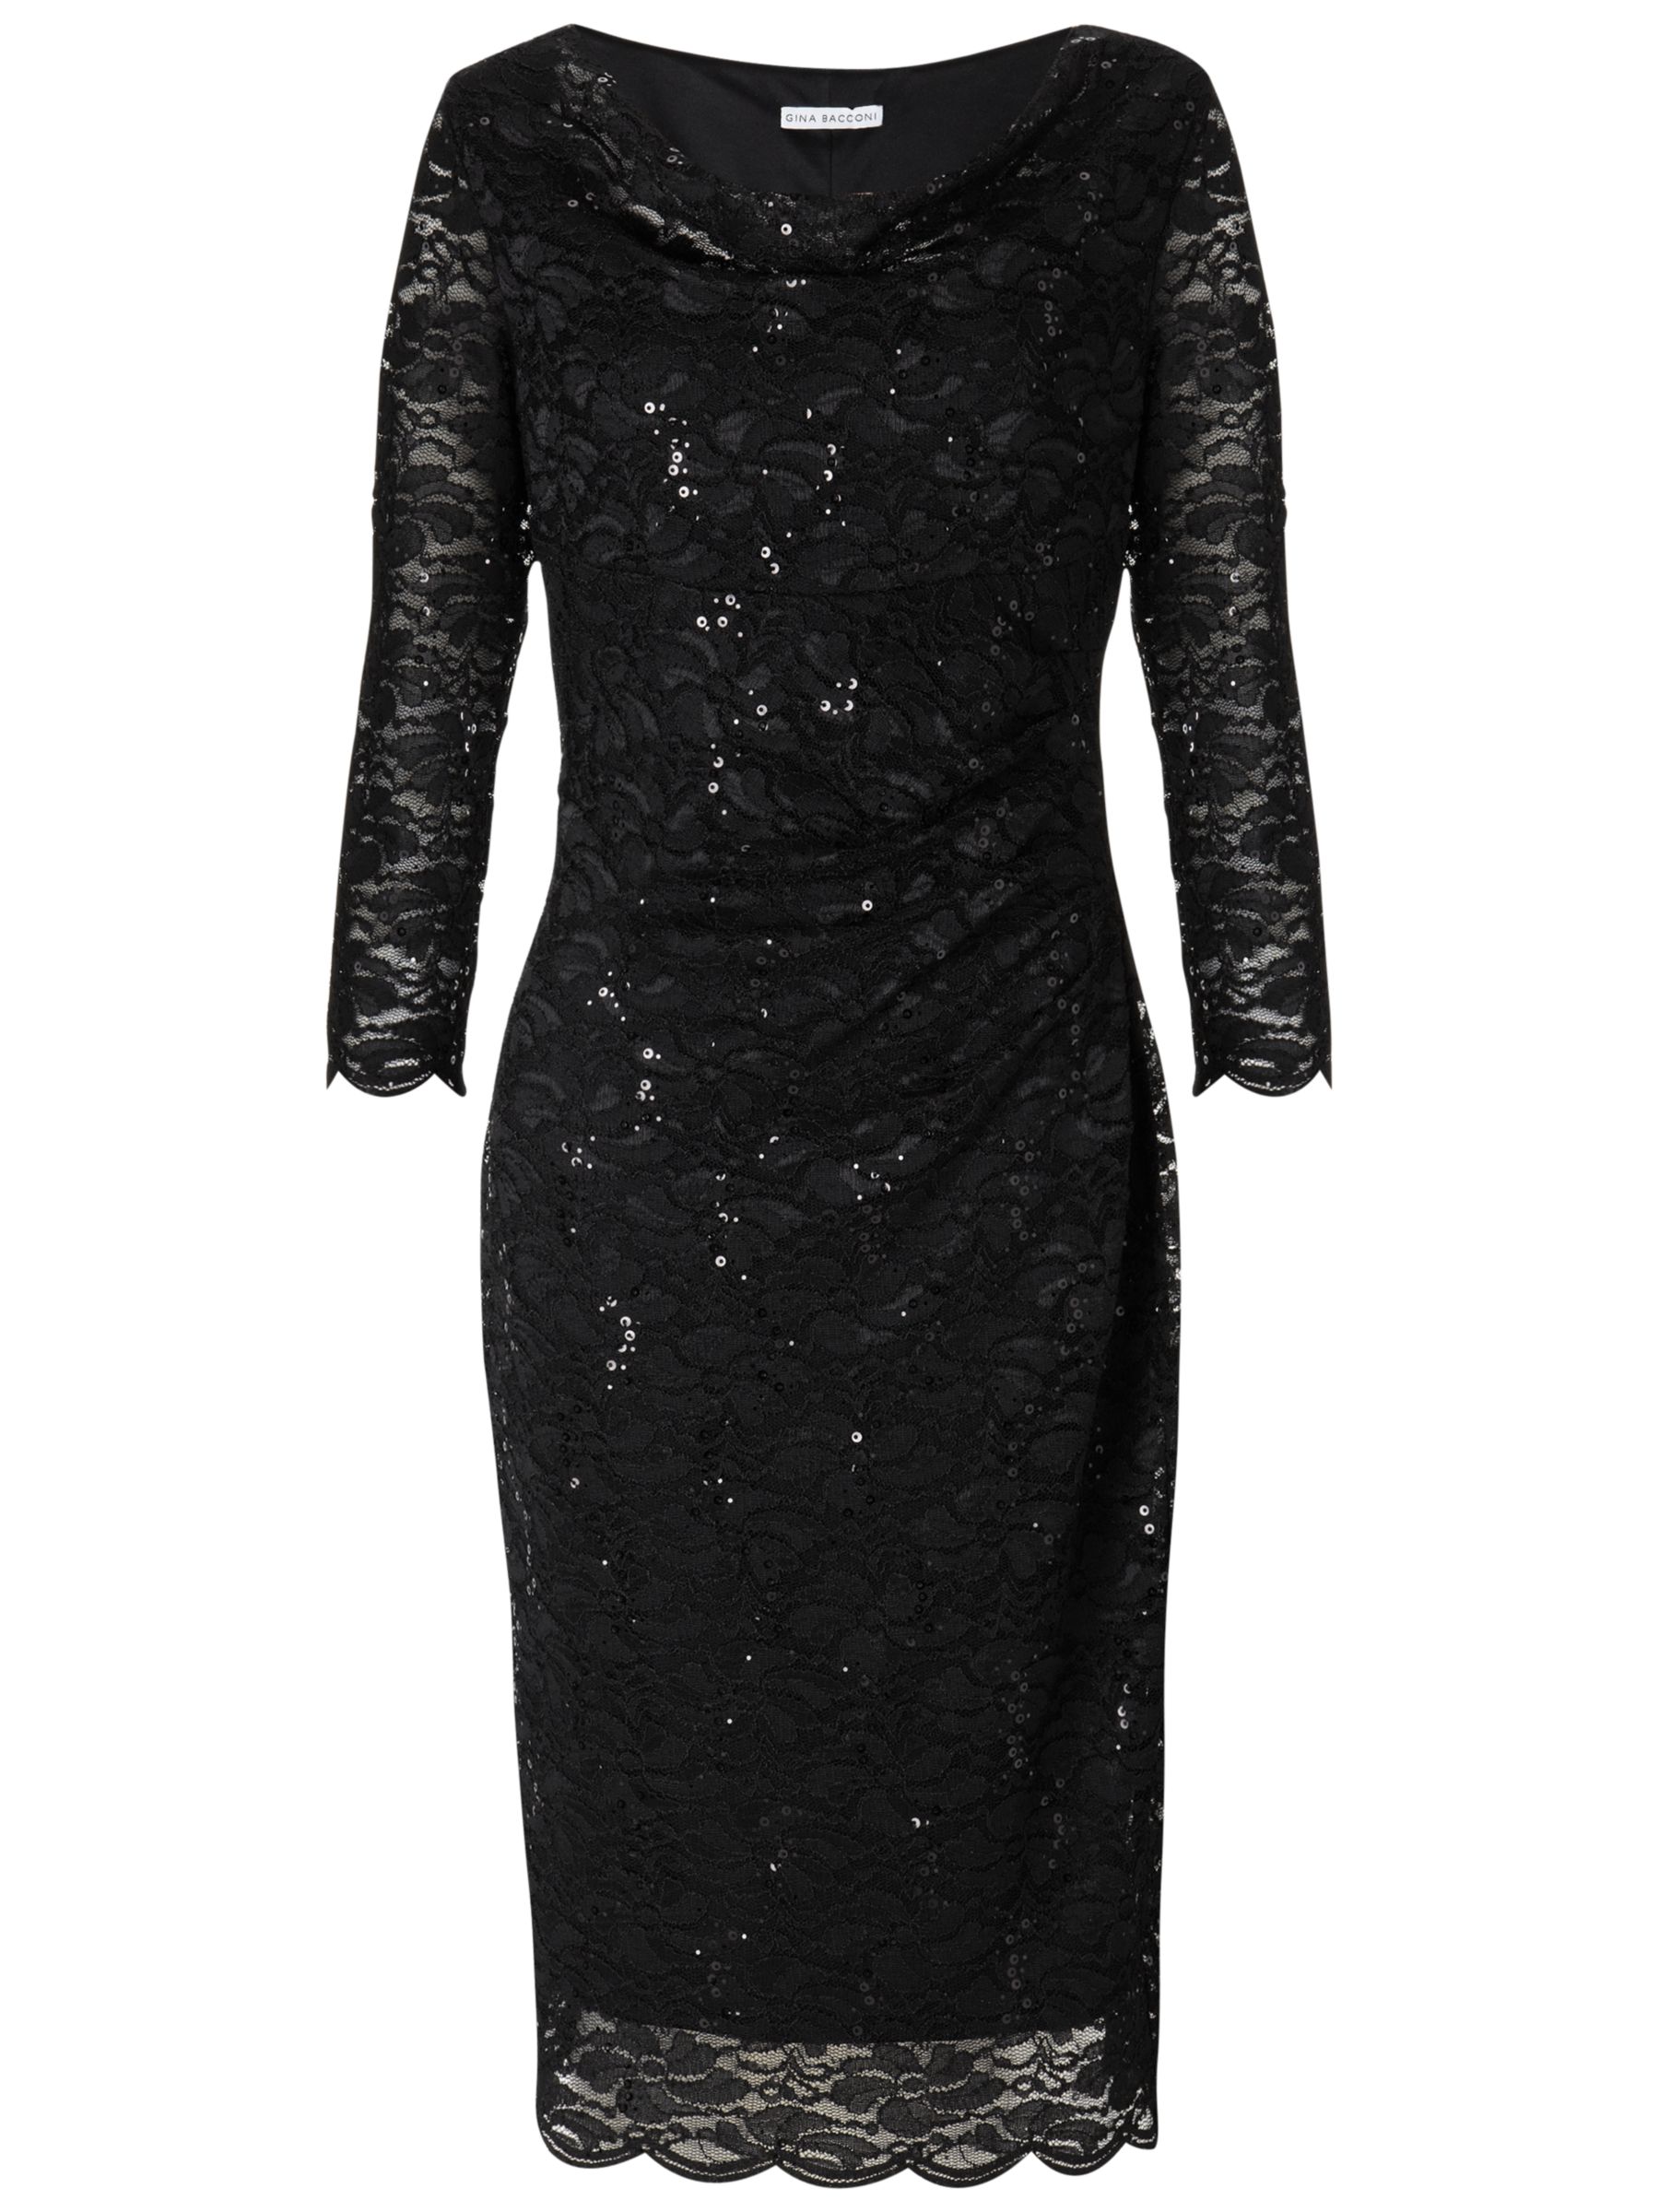 Gina Bacconi Sequin Stretch Lace Dress, Black